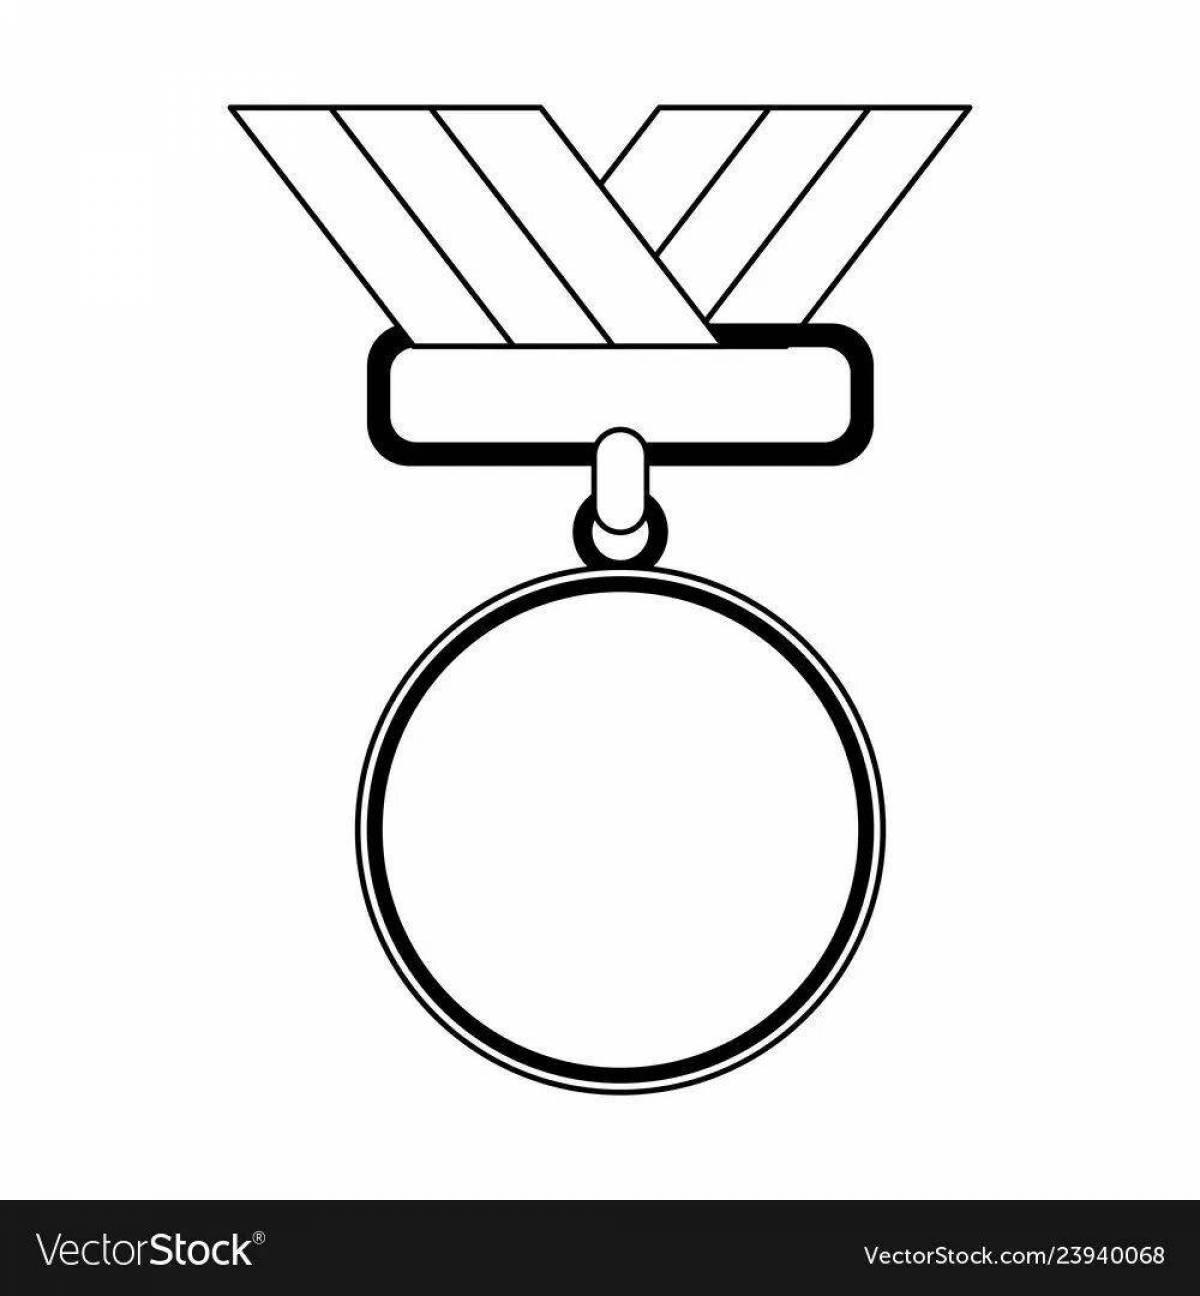 Impressive medal template for February 23